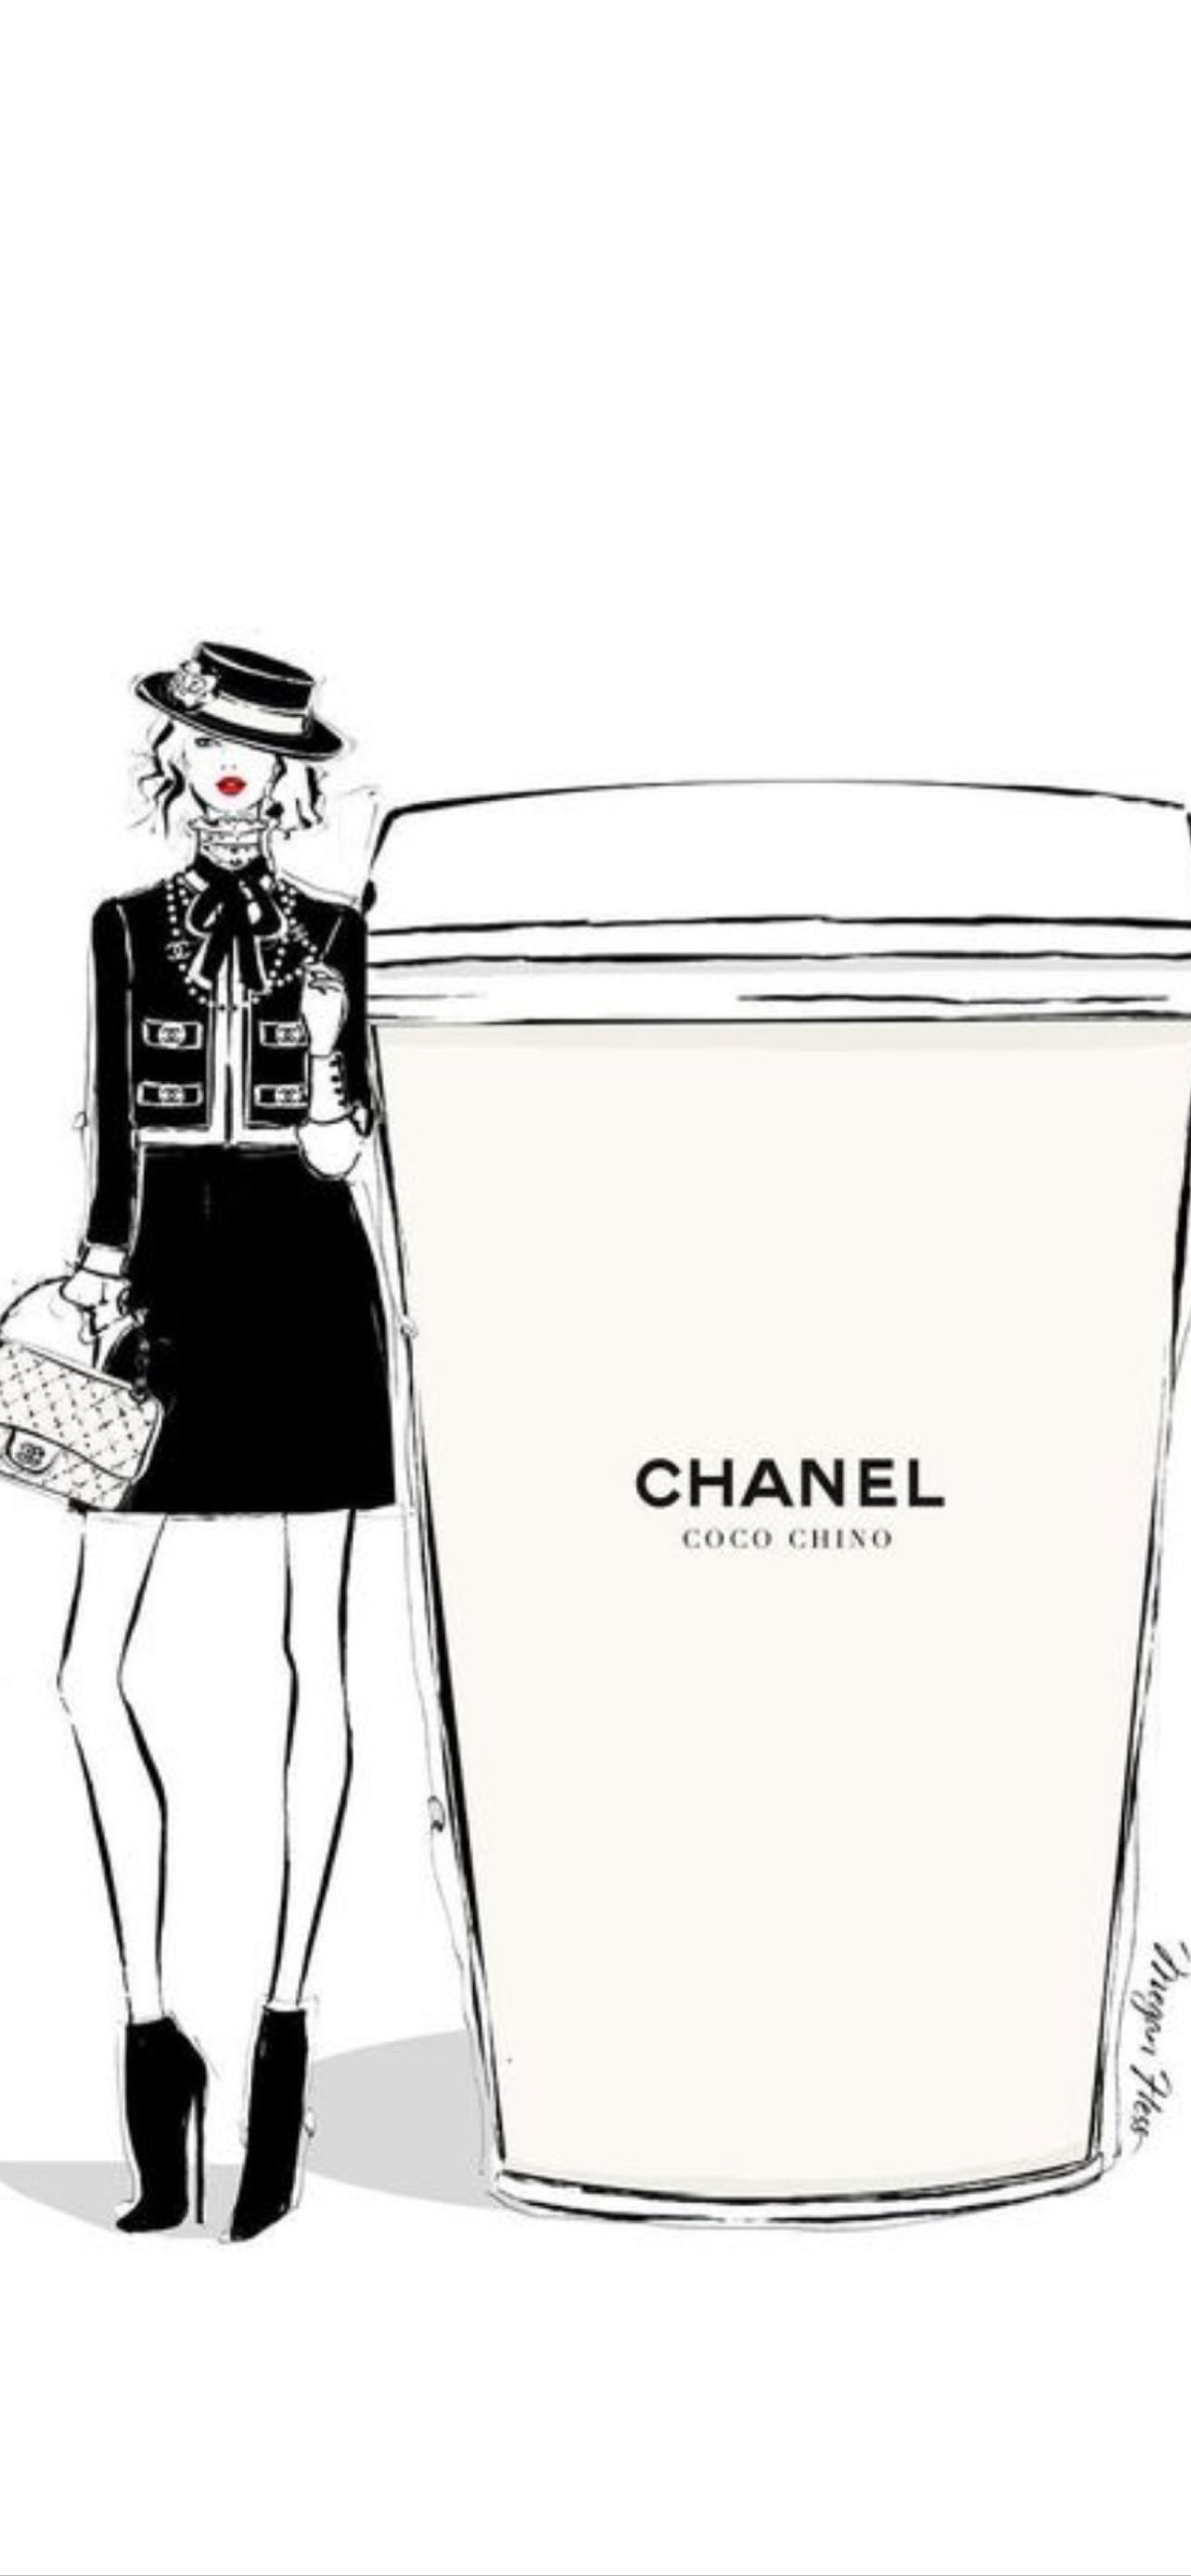 Chanel Logo Wallpaper 11584 - Baltana